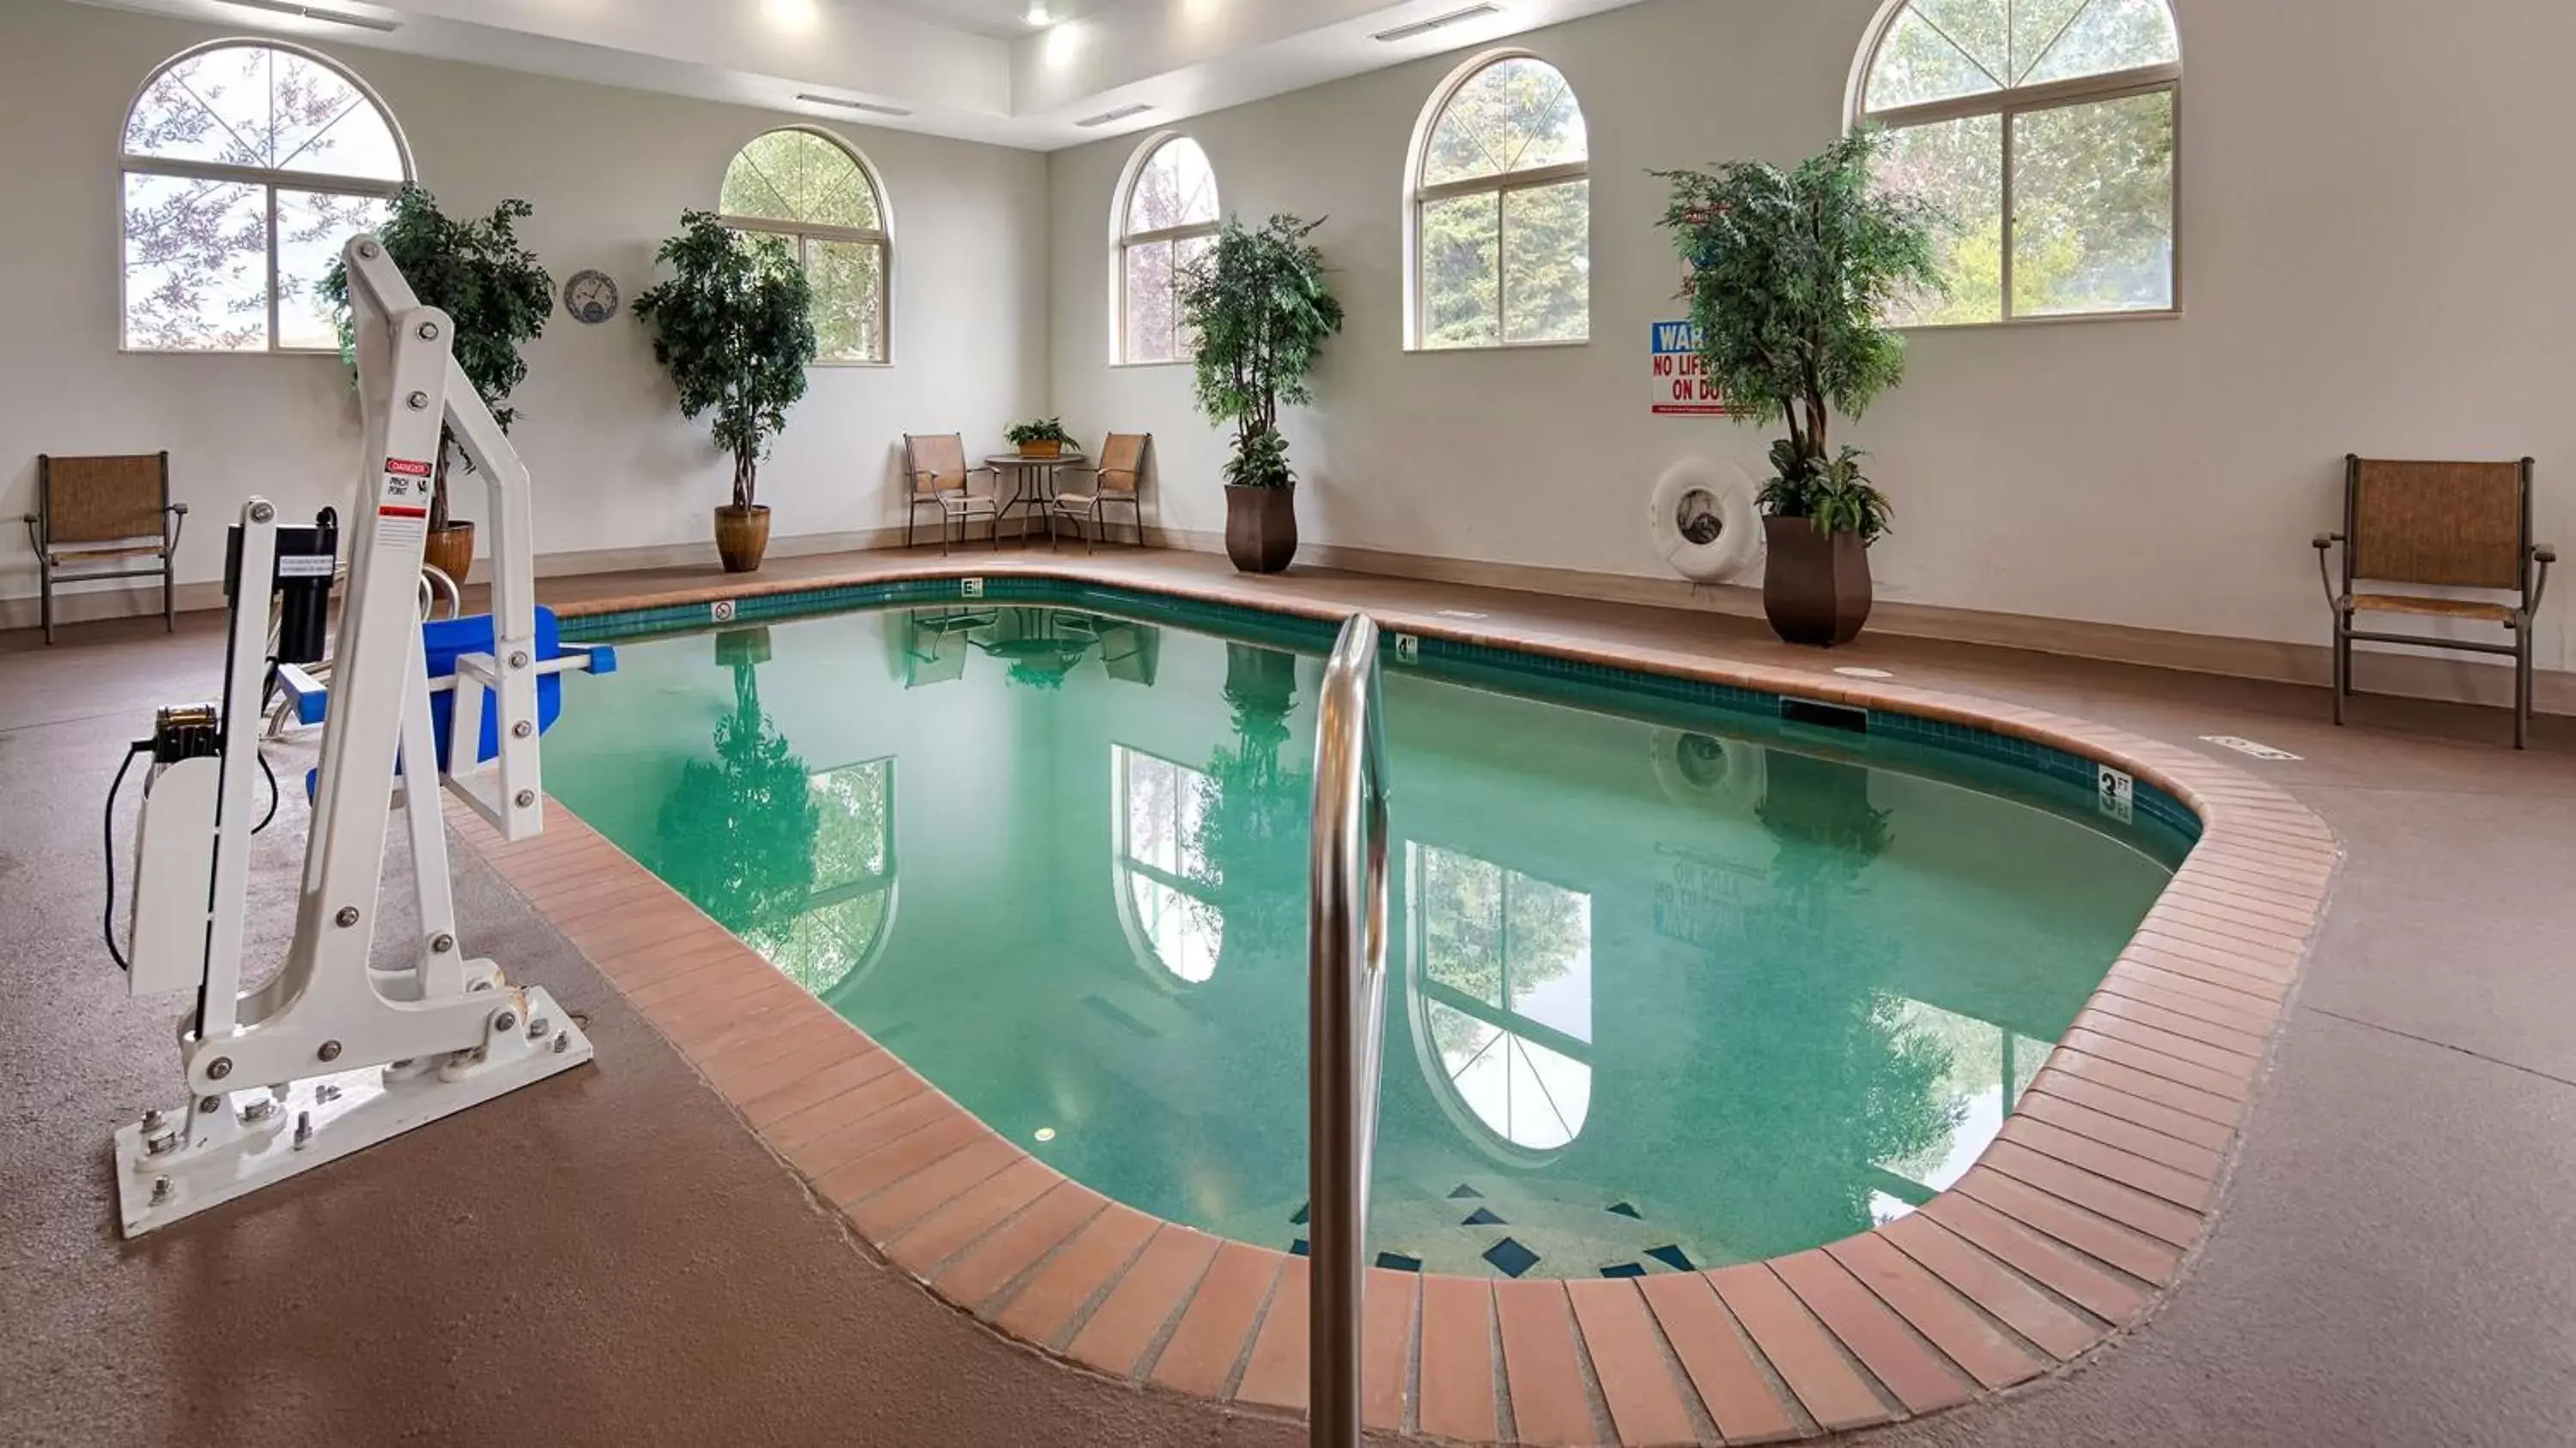 On site, Swimming Pool in Best Western Plus Deer Park Hotel and Suites